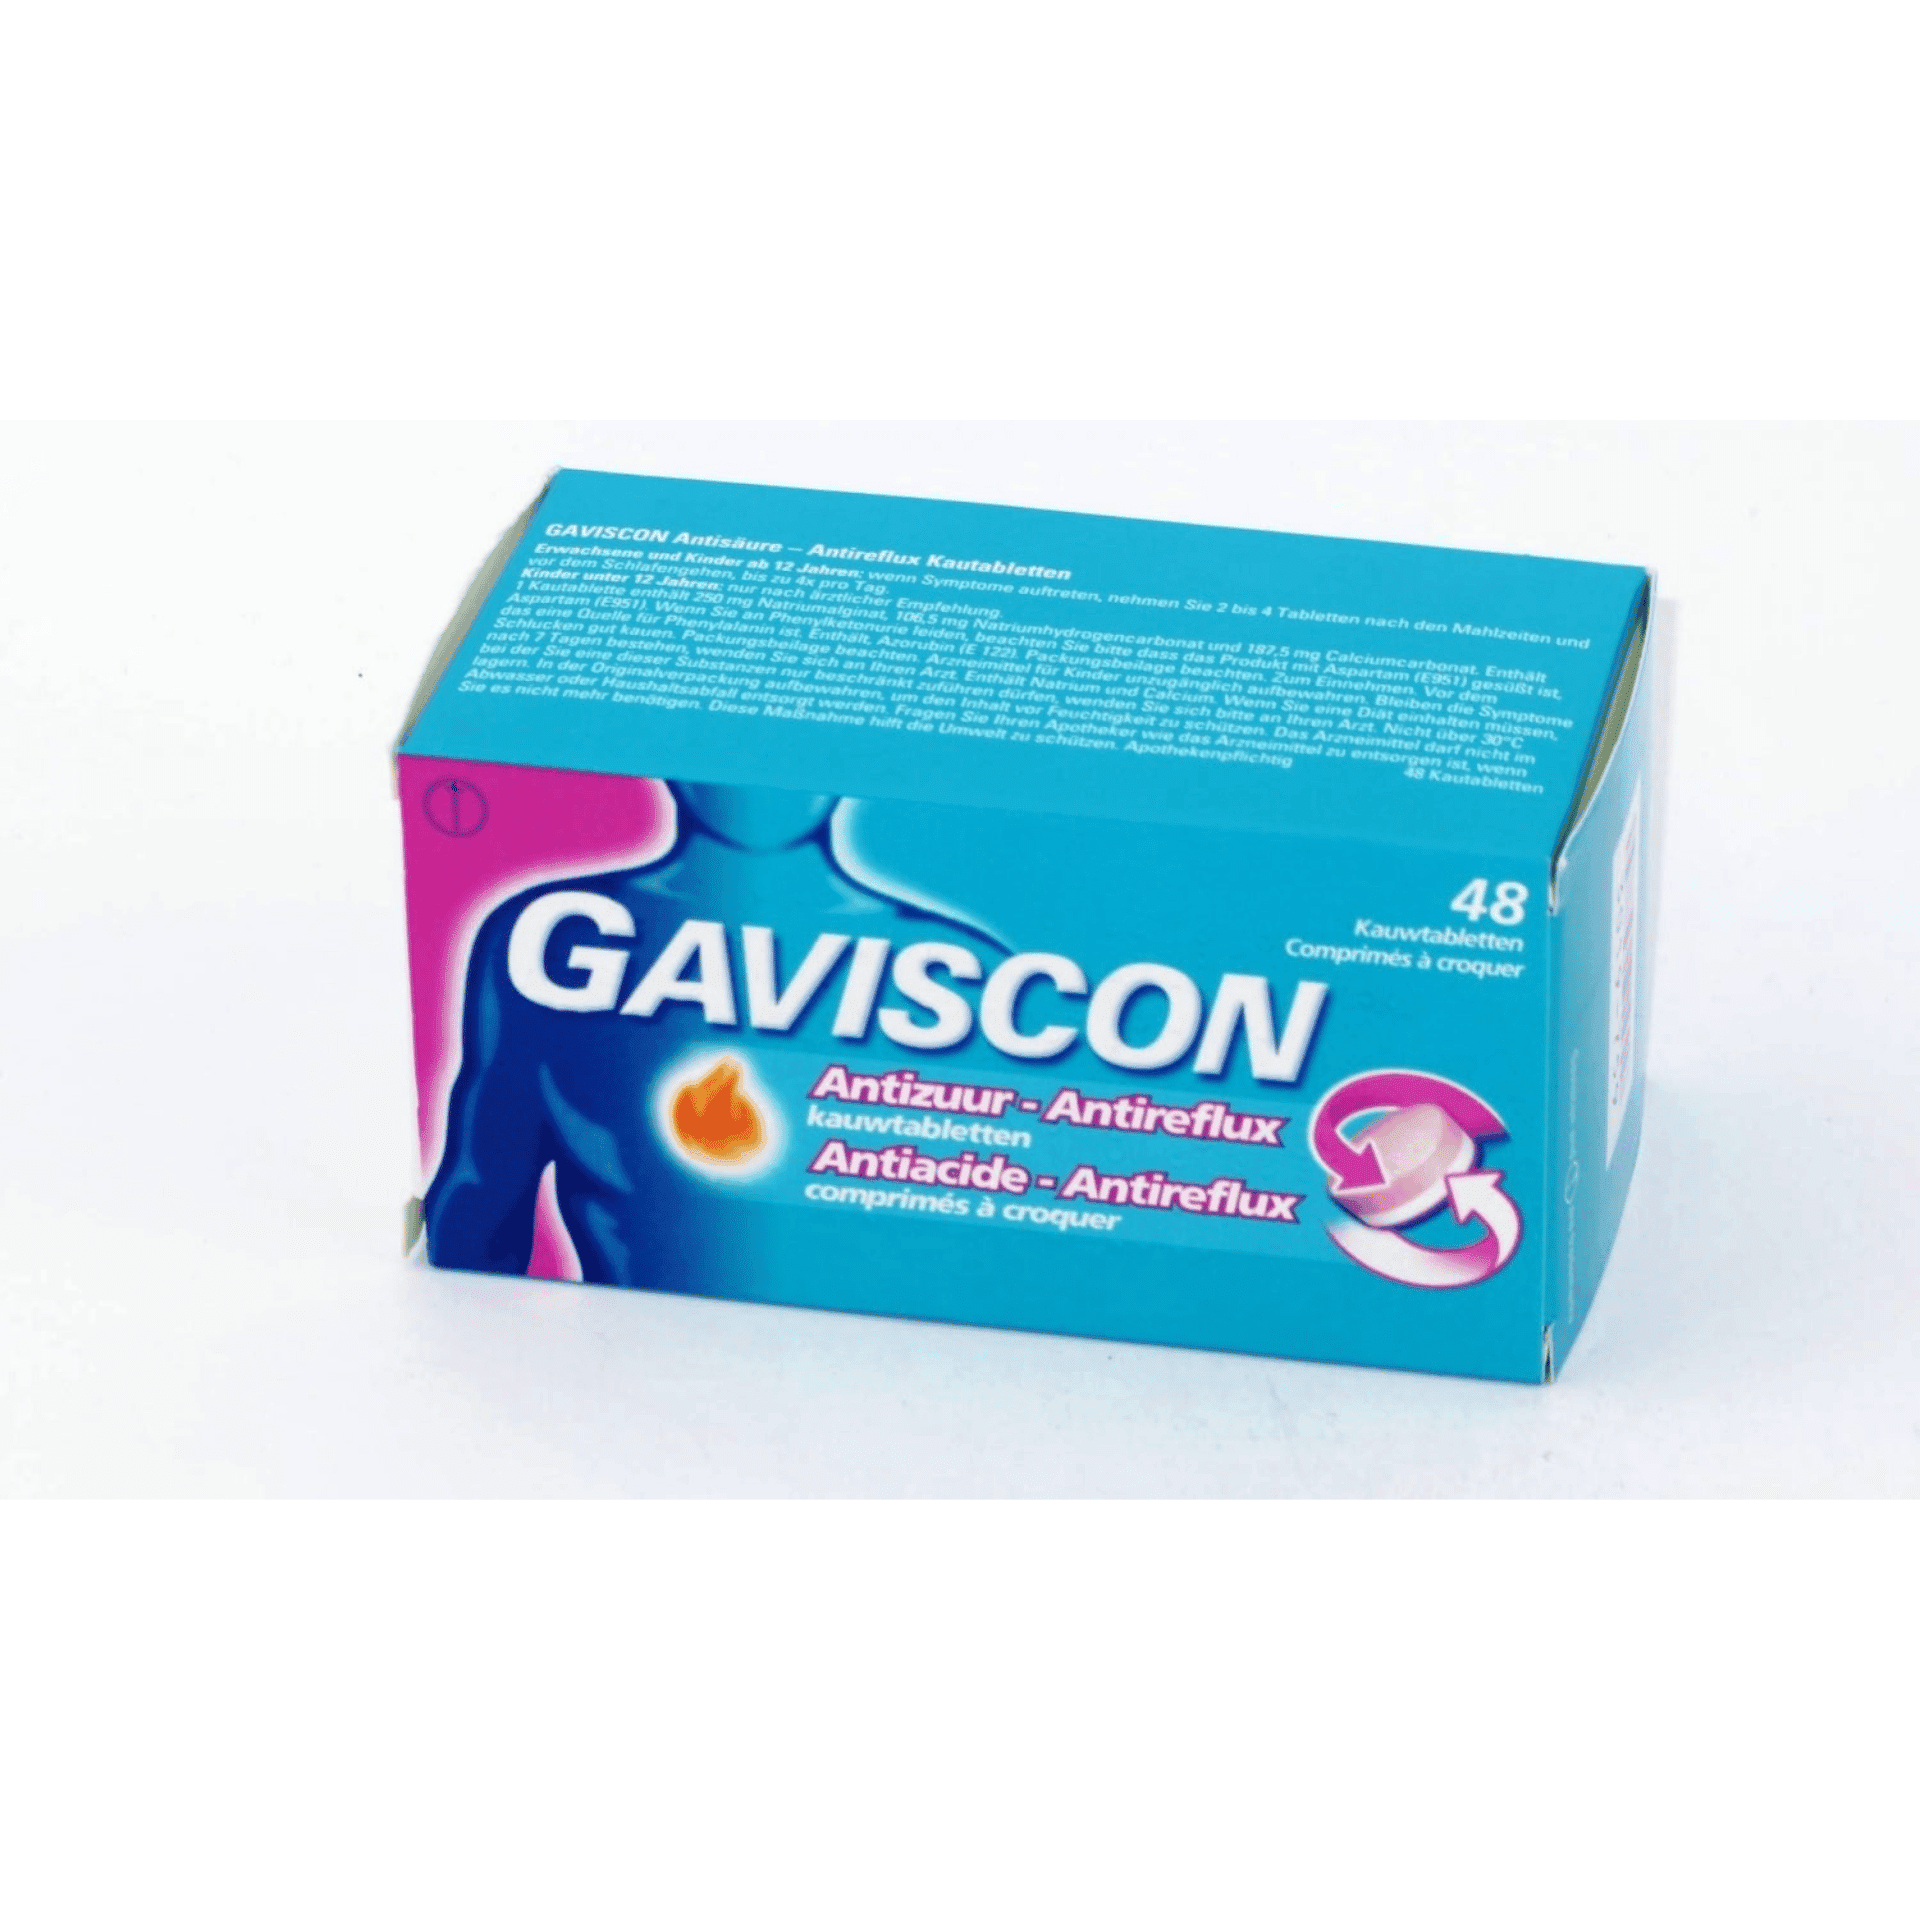 Gaviscon Antizuur-Antireflux 48 kauwtabletten